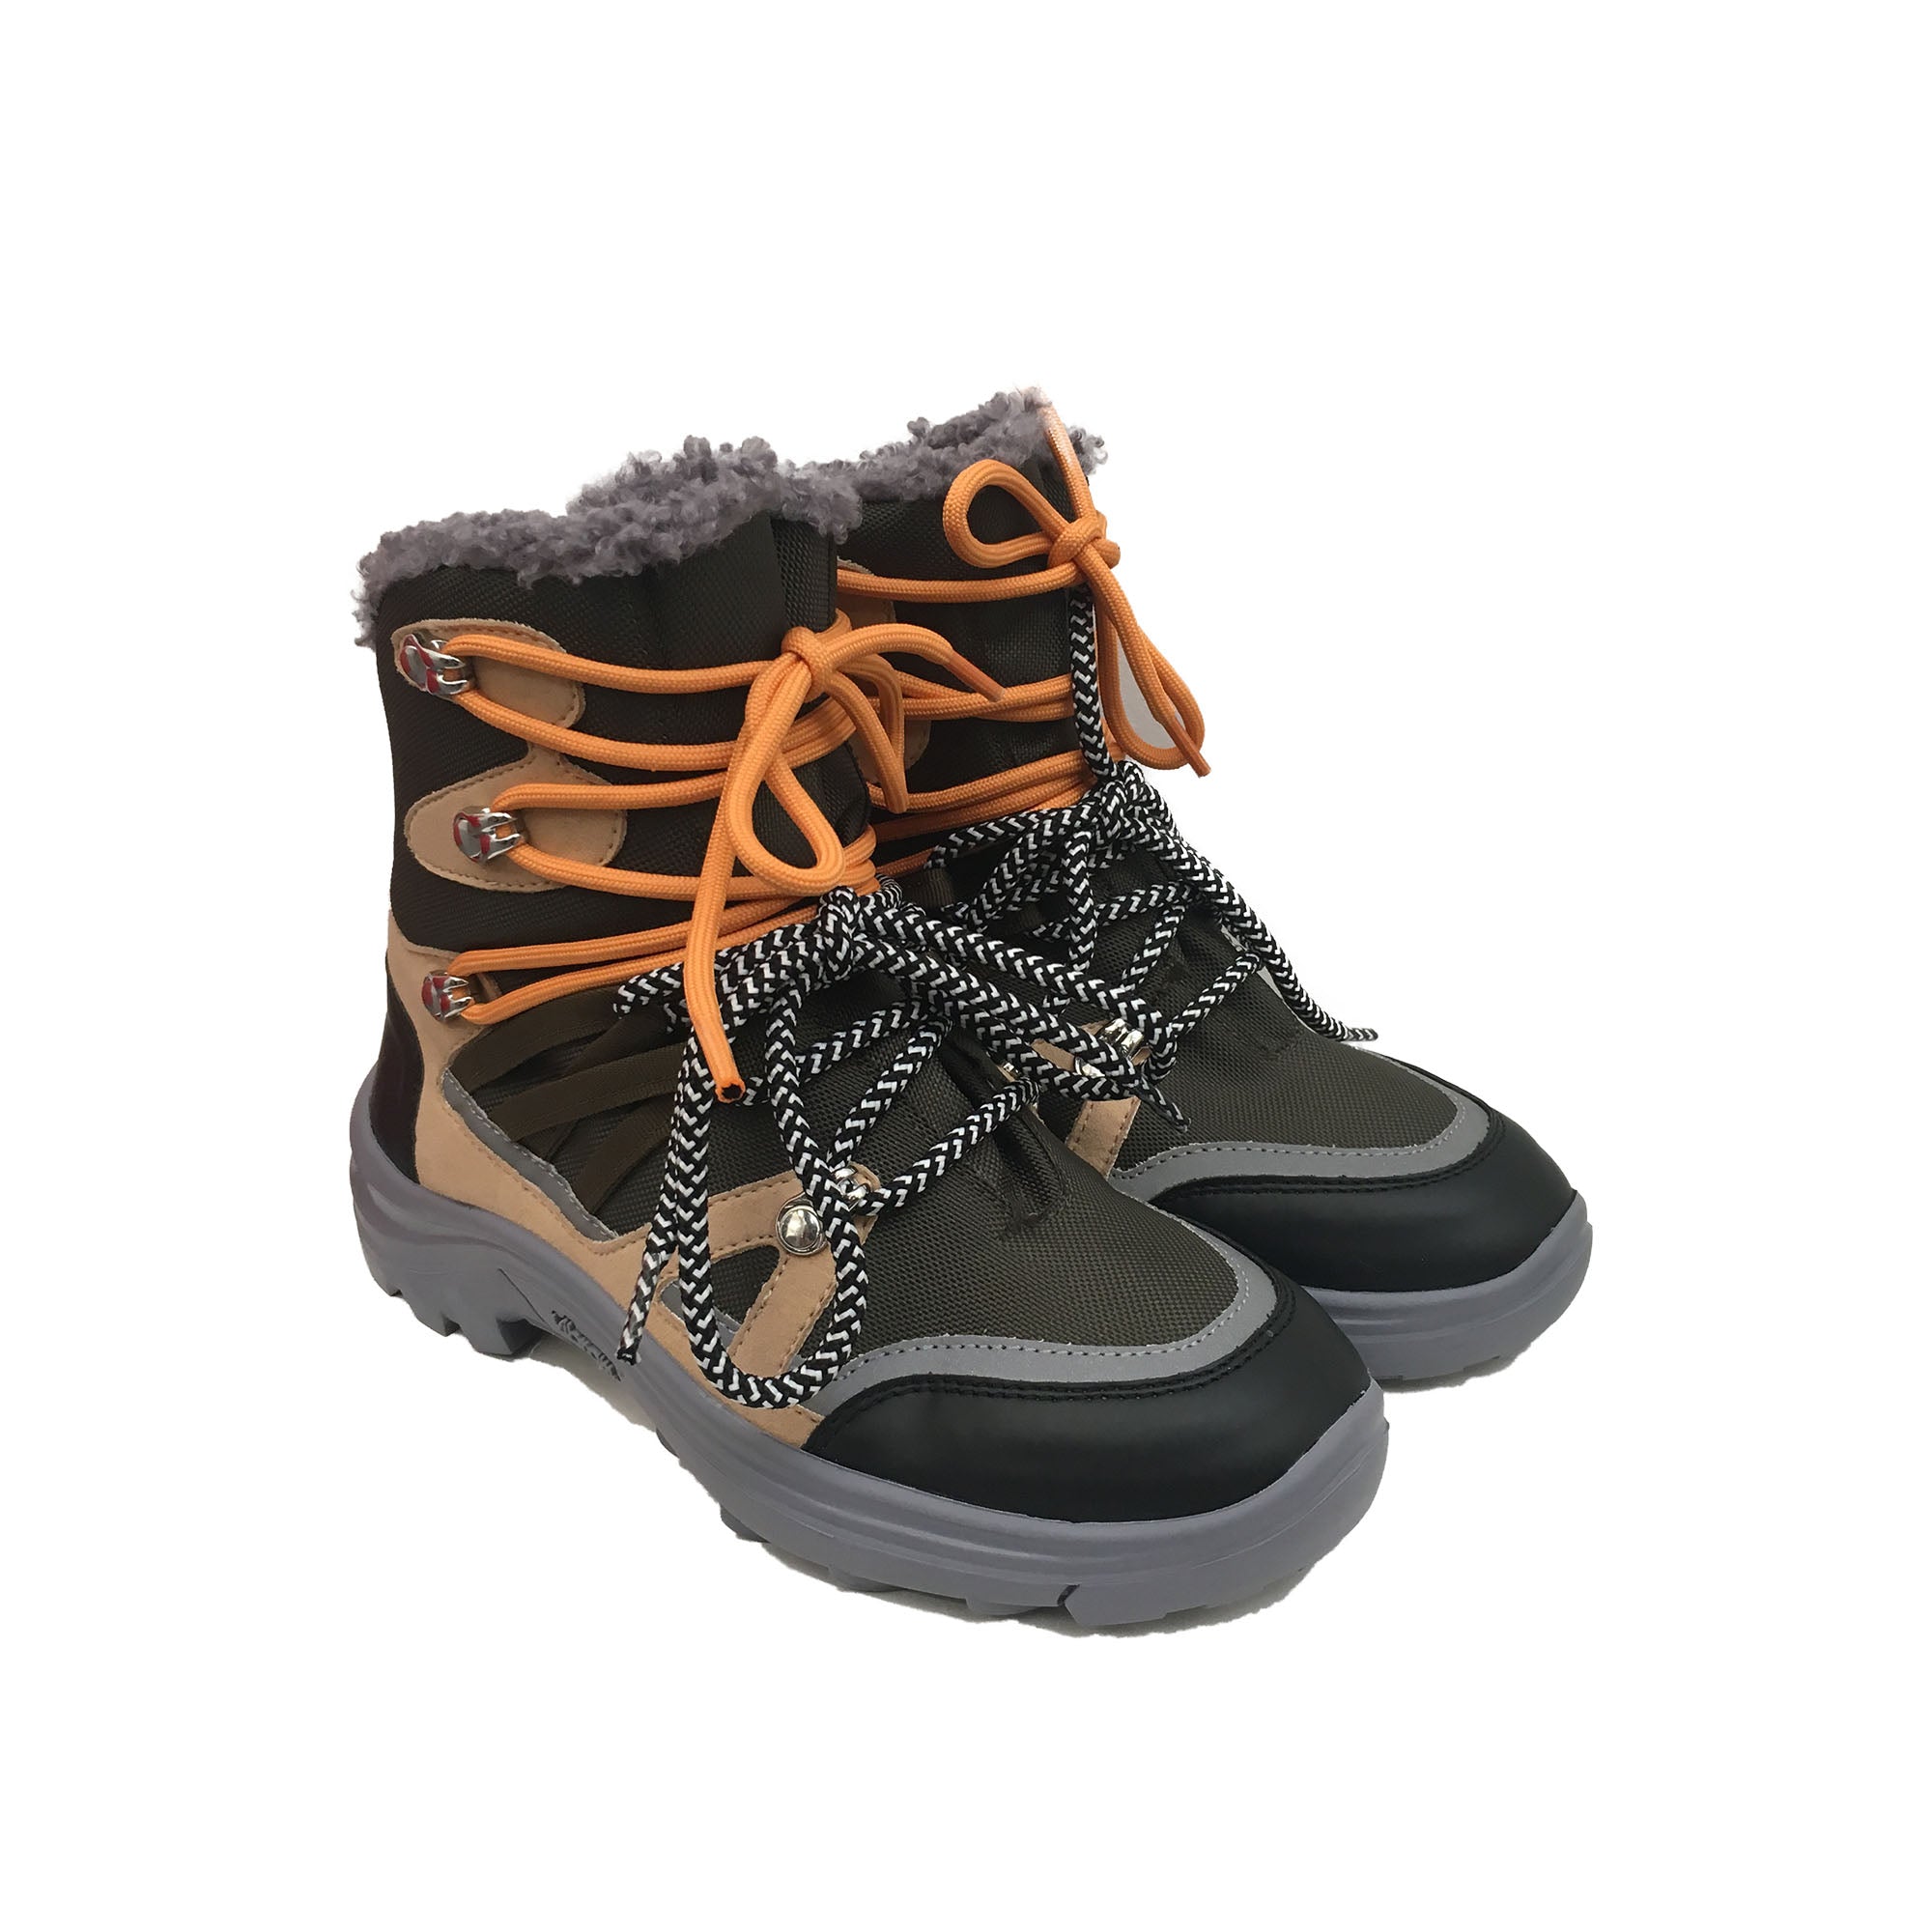 Boys Black Hiking Boots